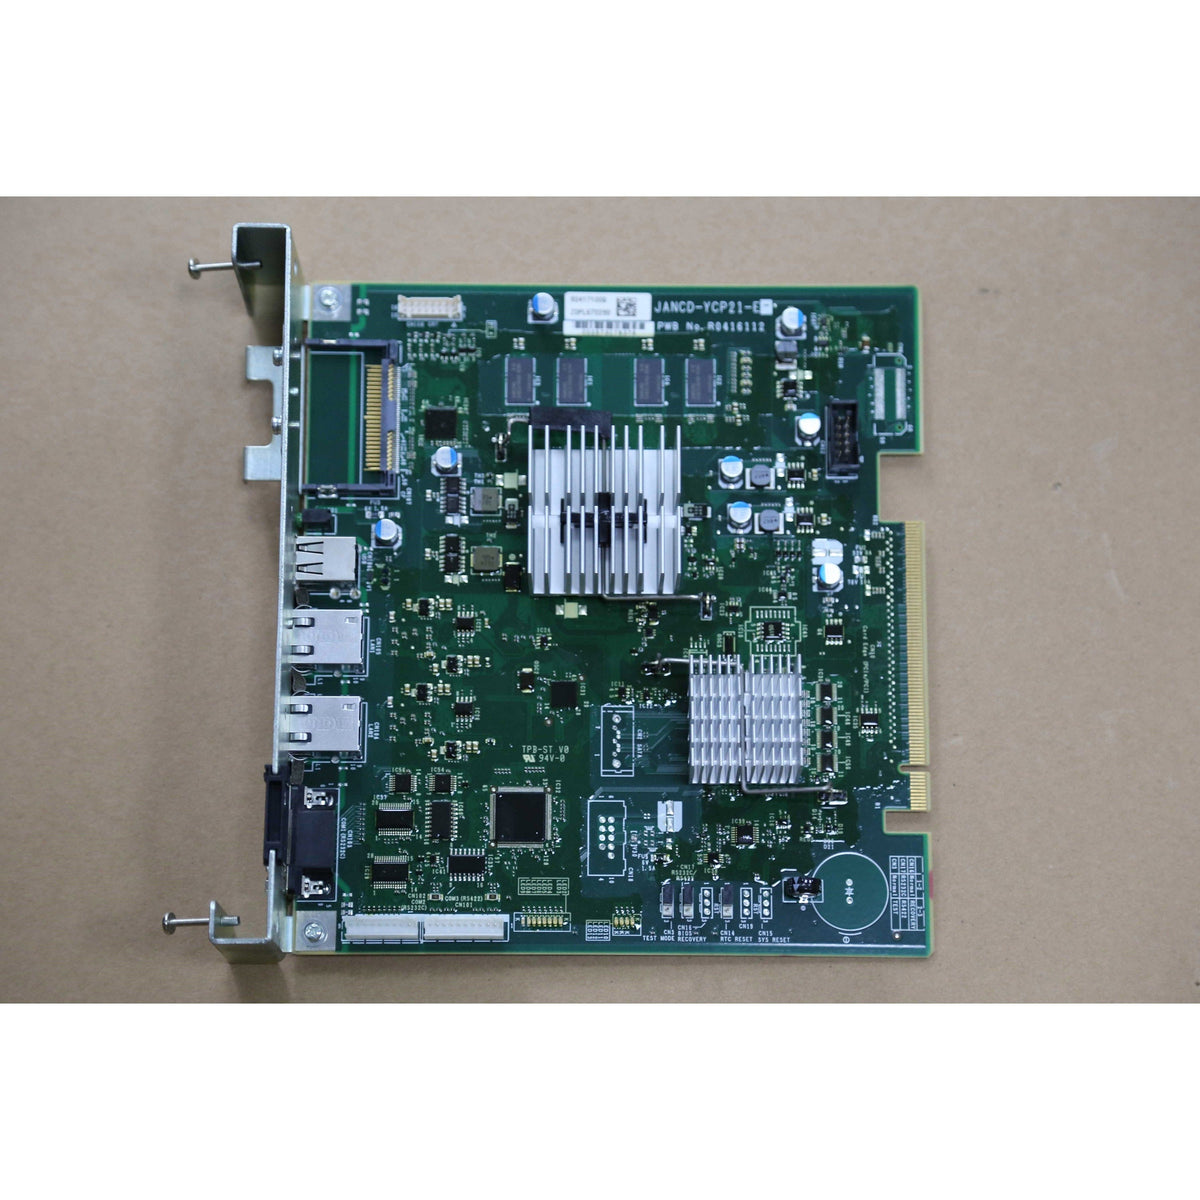 MK7661 YASKAWA ELECTRIC JANCD-MSP02 OPERATOR CONTROL PC BOARD-